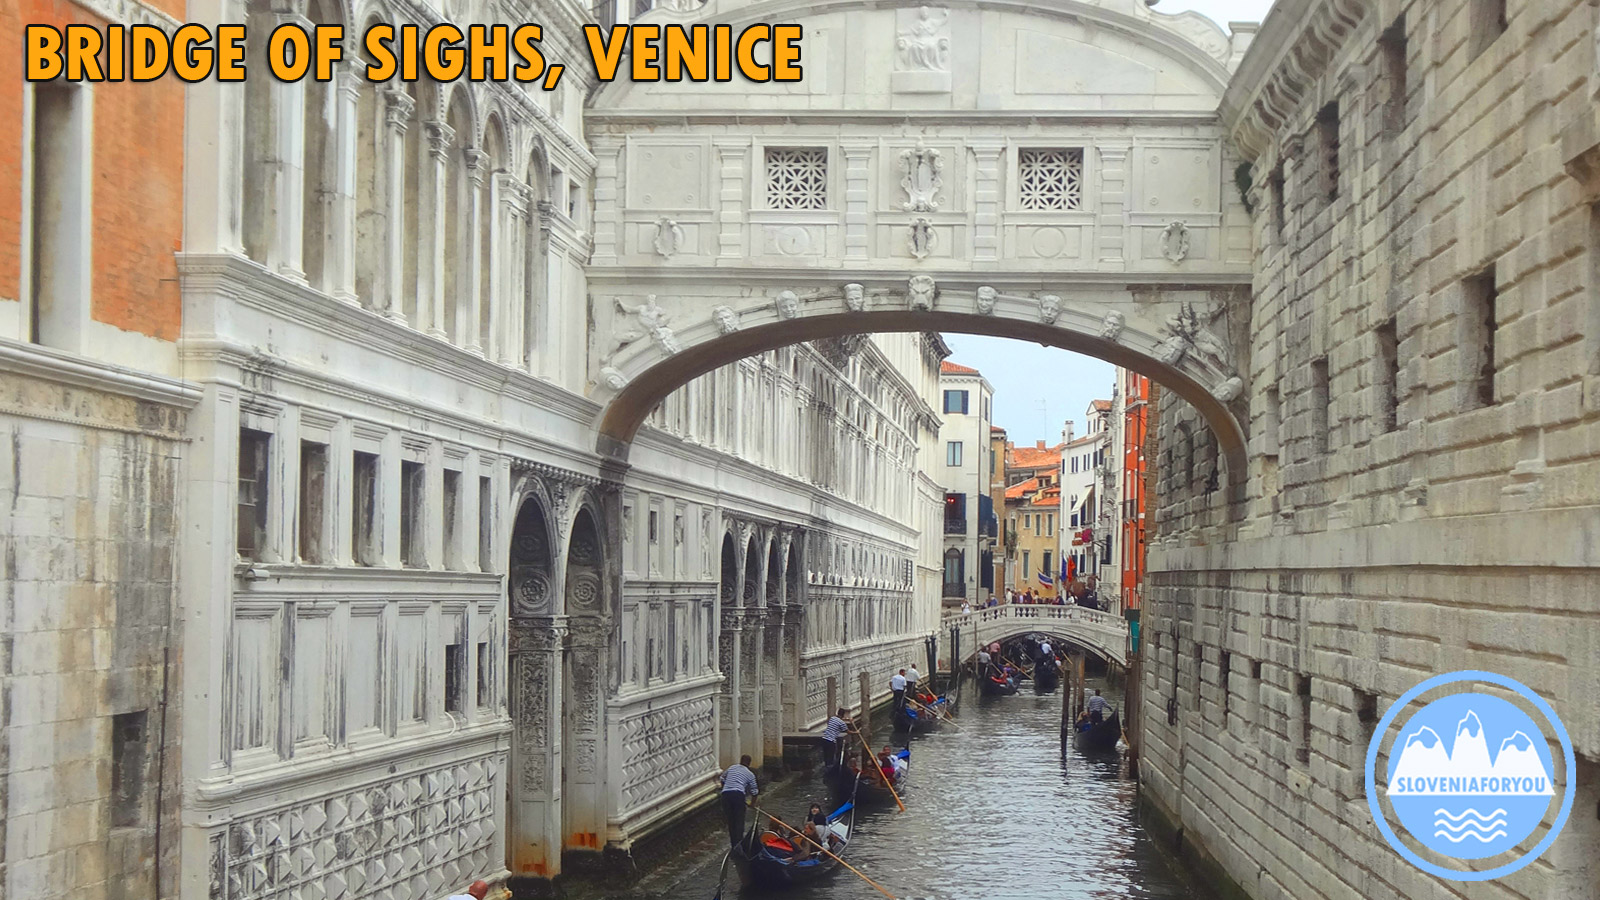 Bridge of Sighs, Venice, Sloveniaforyou